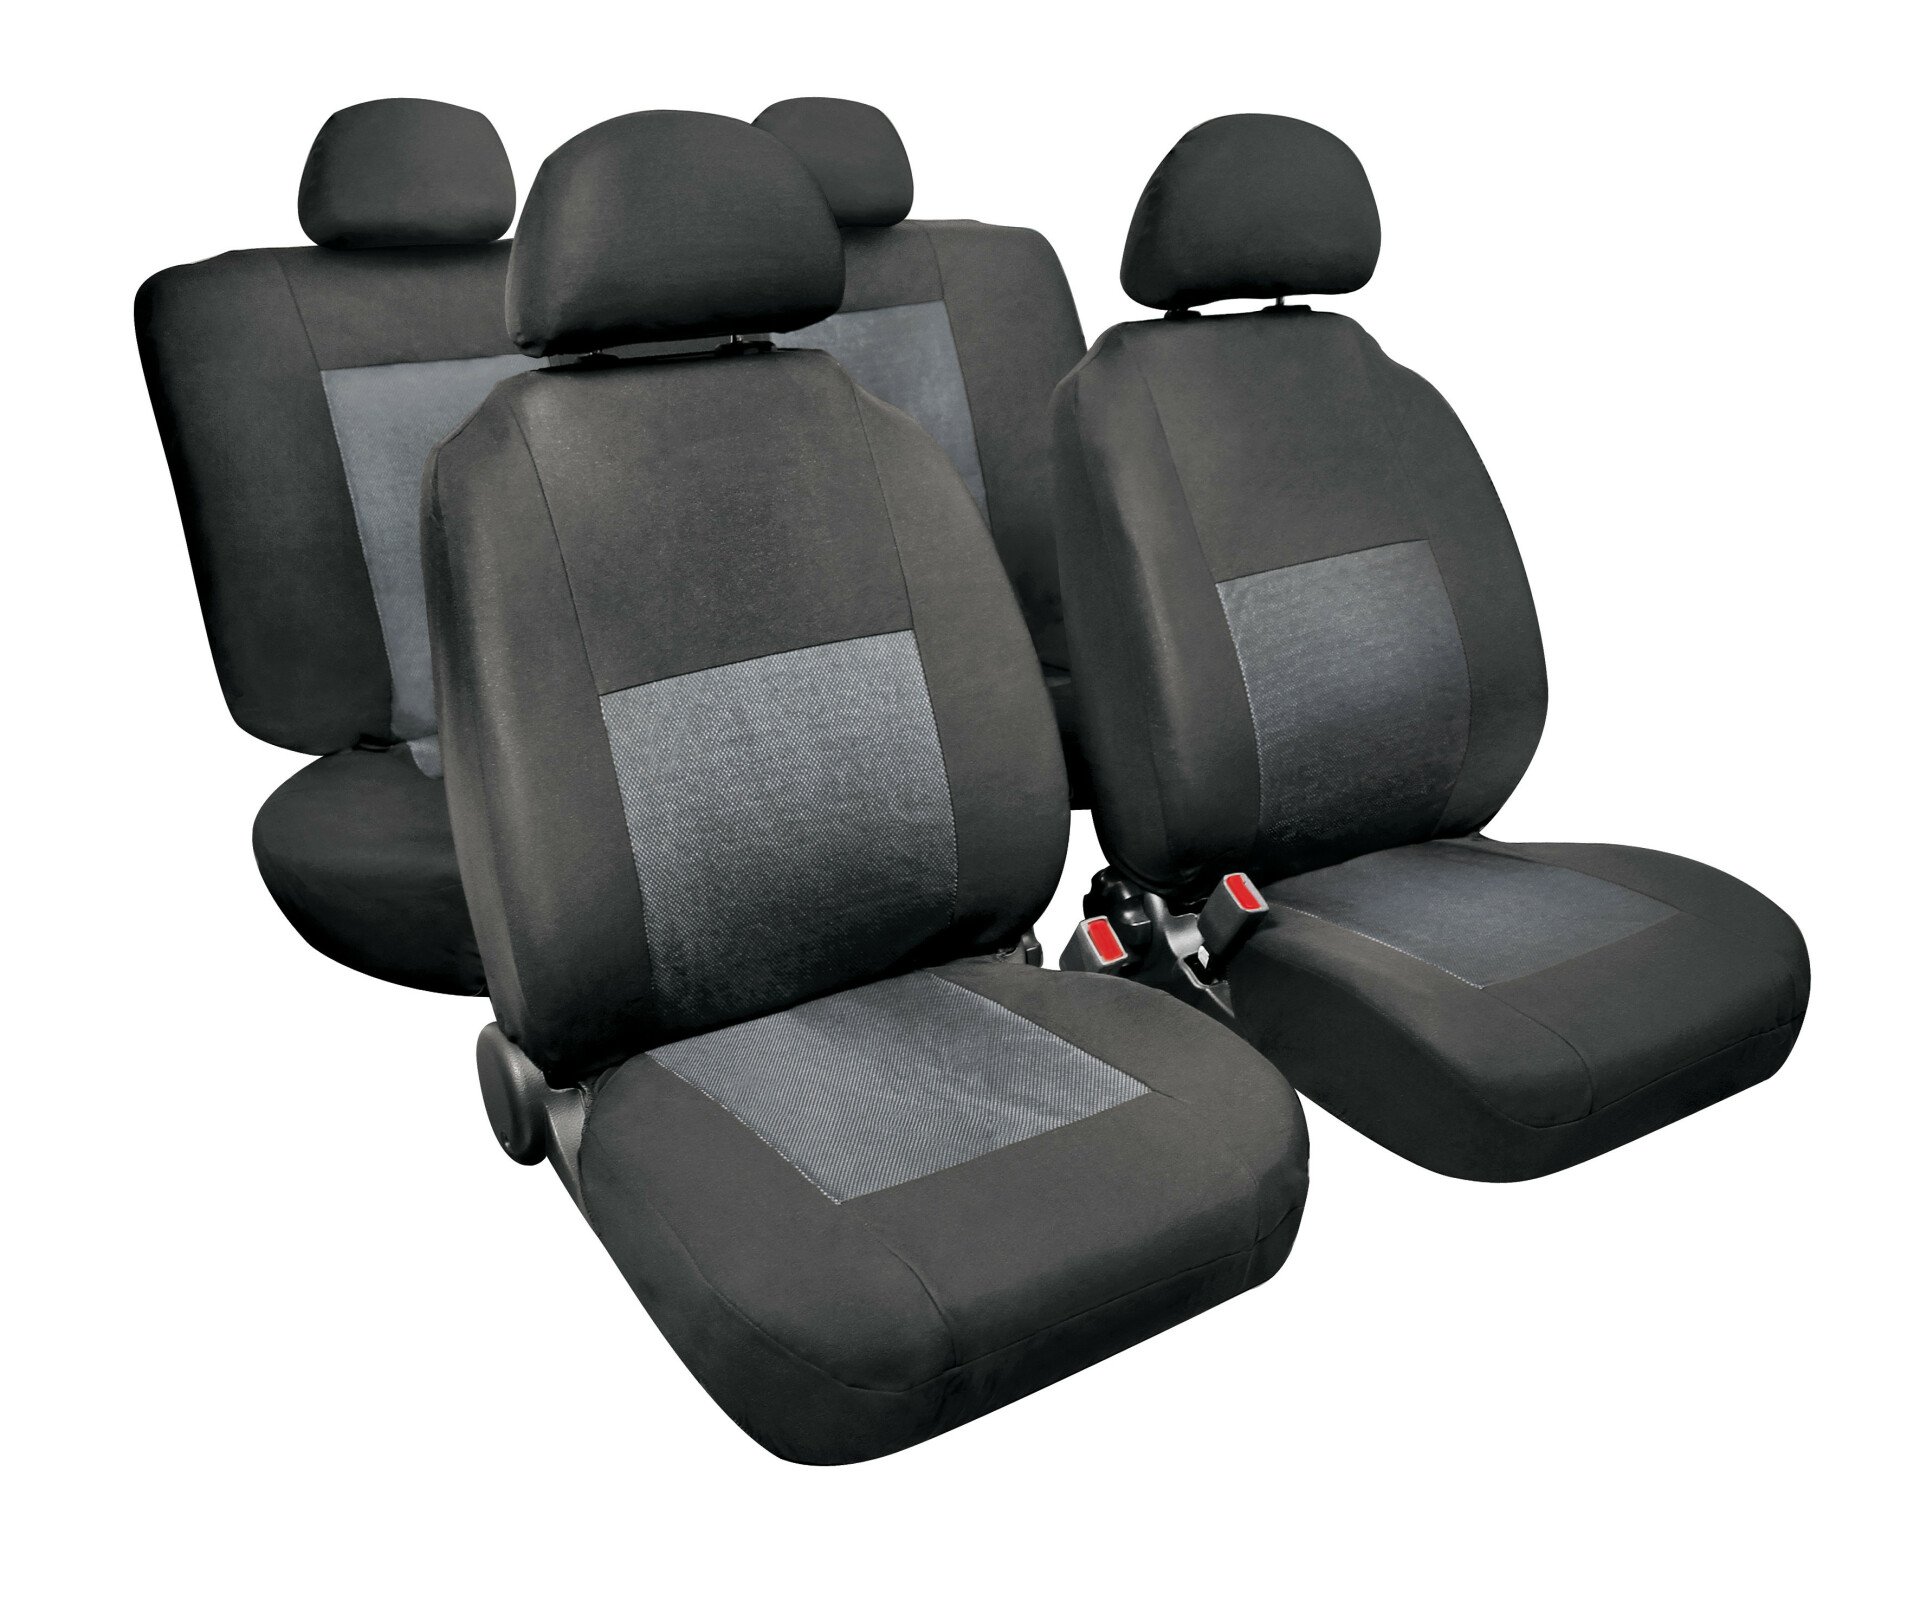 Sport, high-quality jacquard seat cover set - Grey thumb